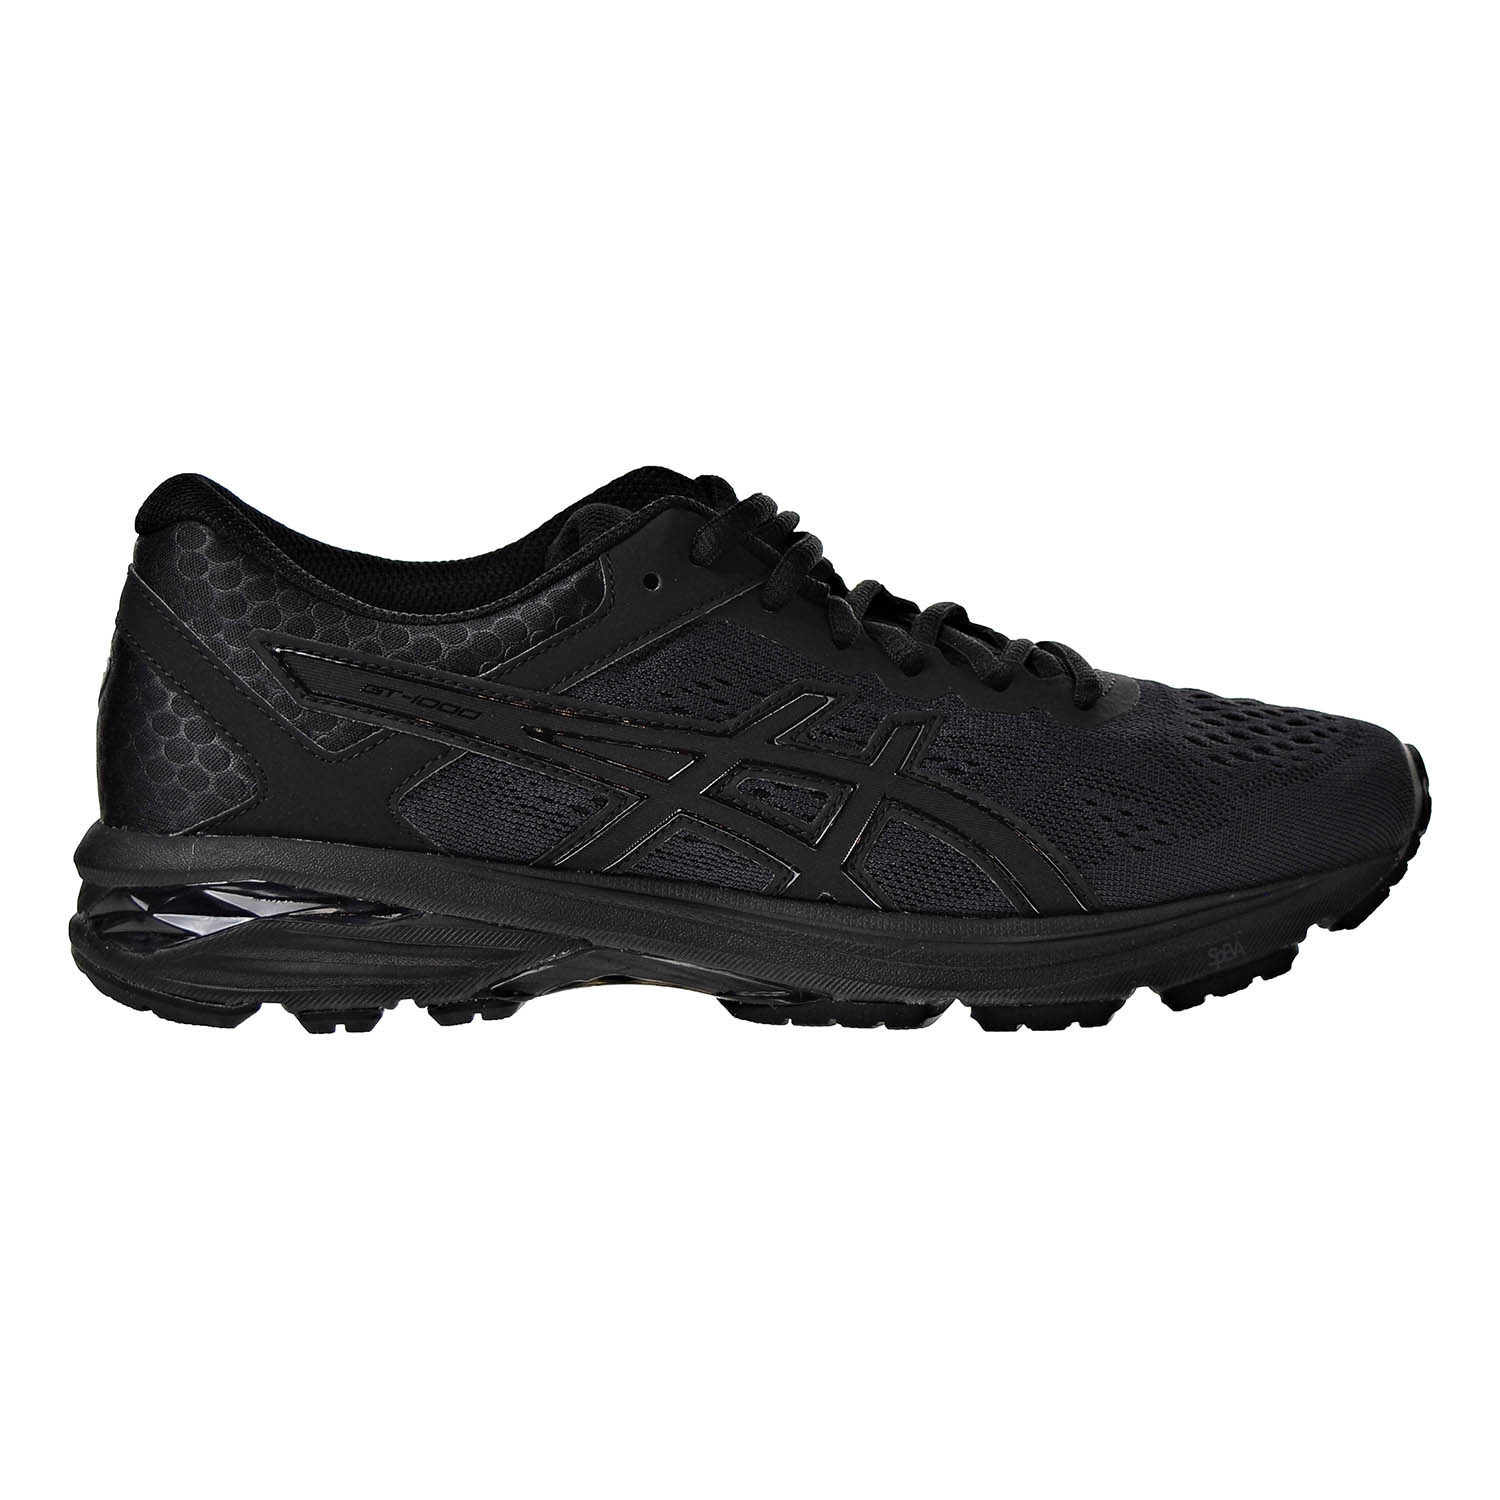 Asics GT-1000 6 Men's Running Shoes Black-Black-Silver T7A4N-9090 | eBay